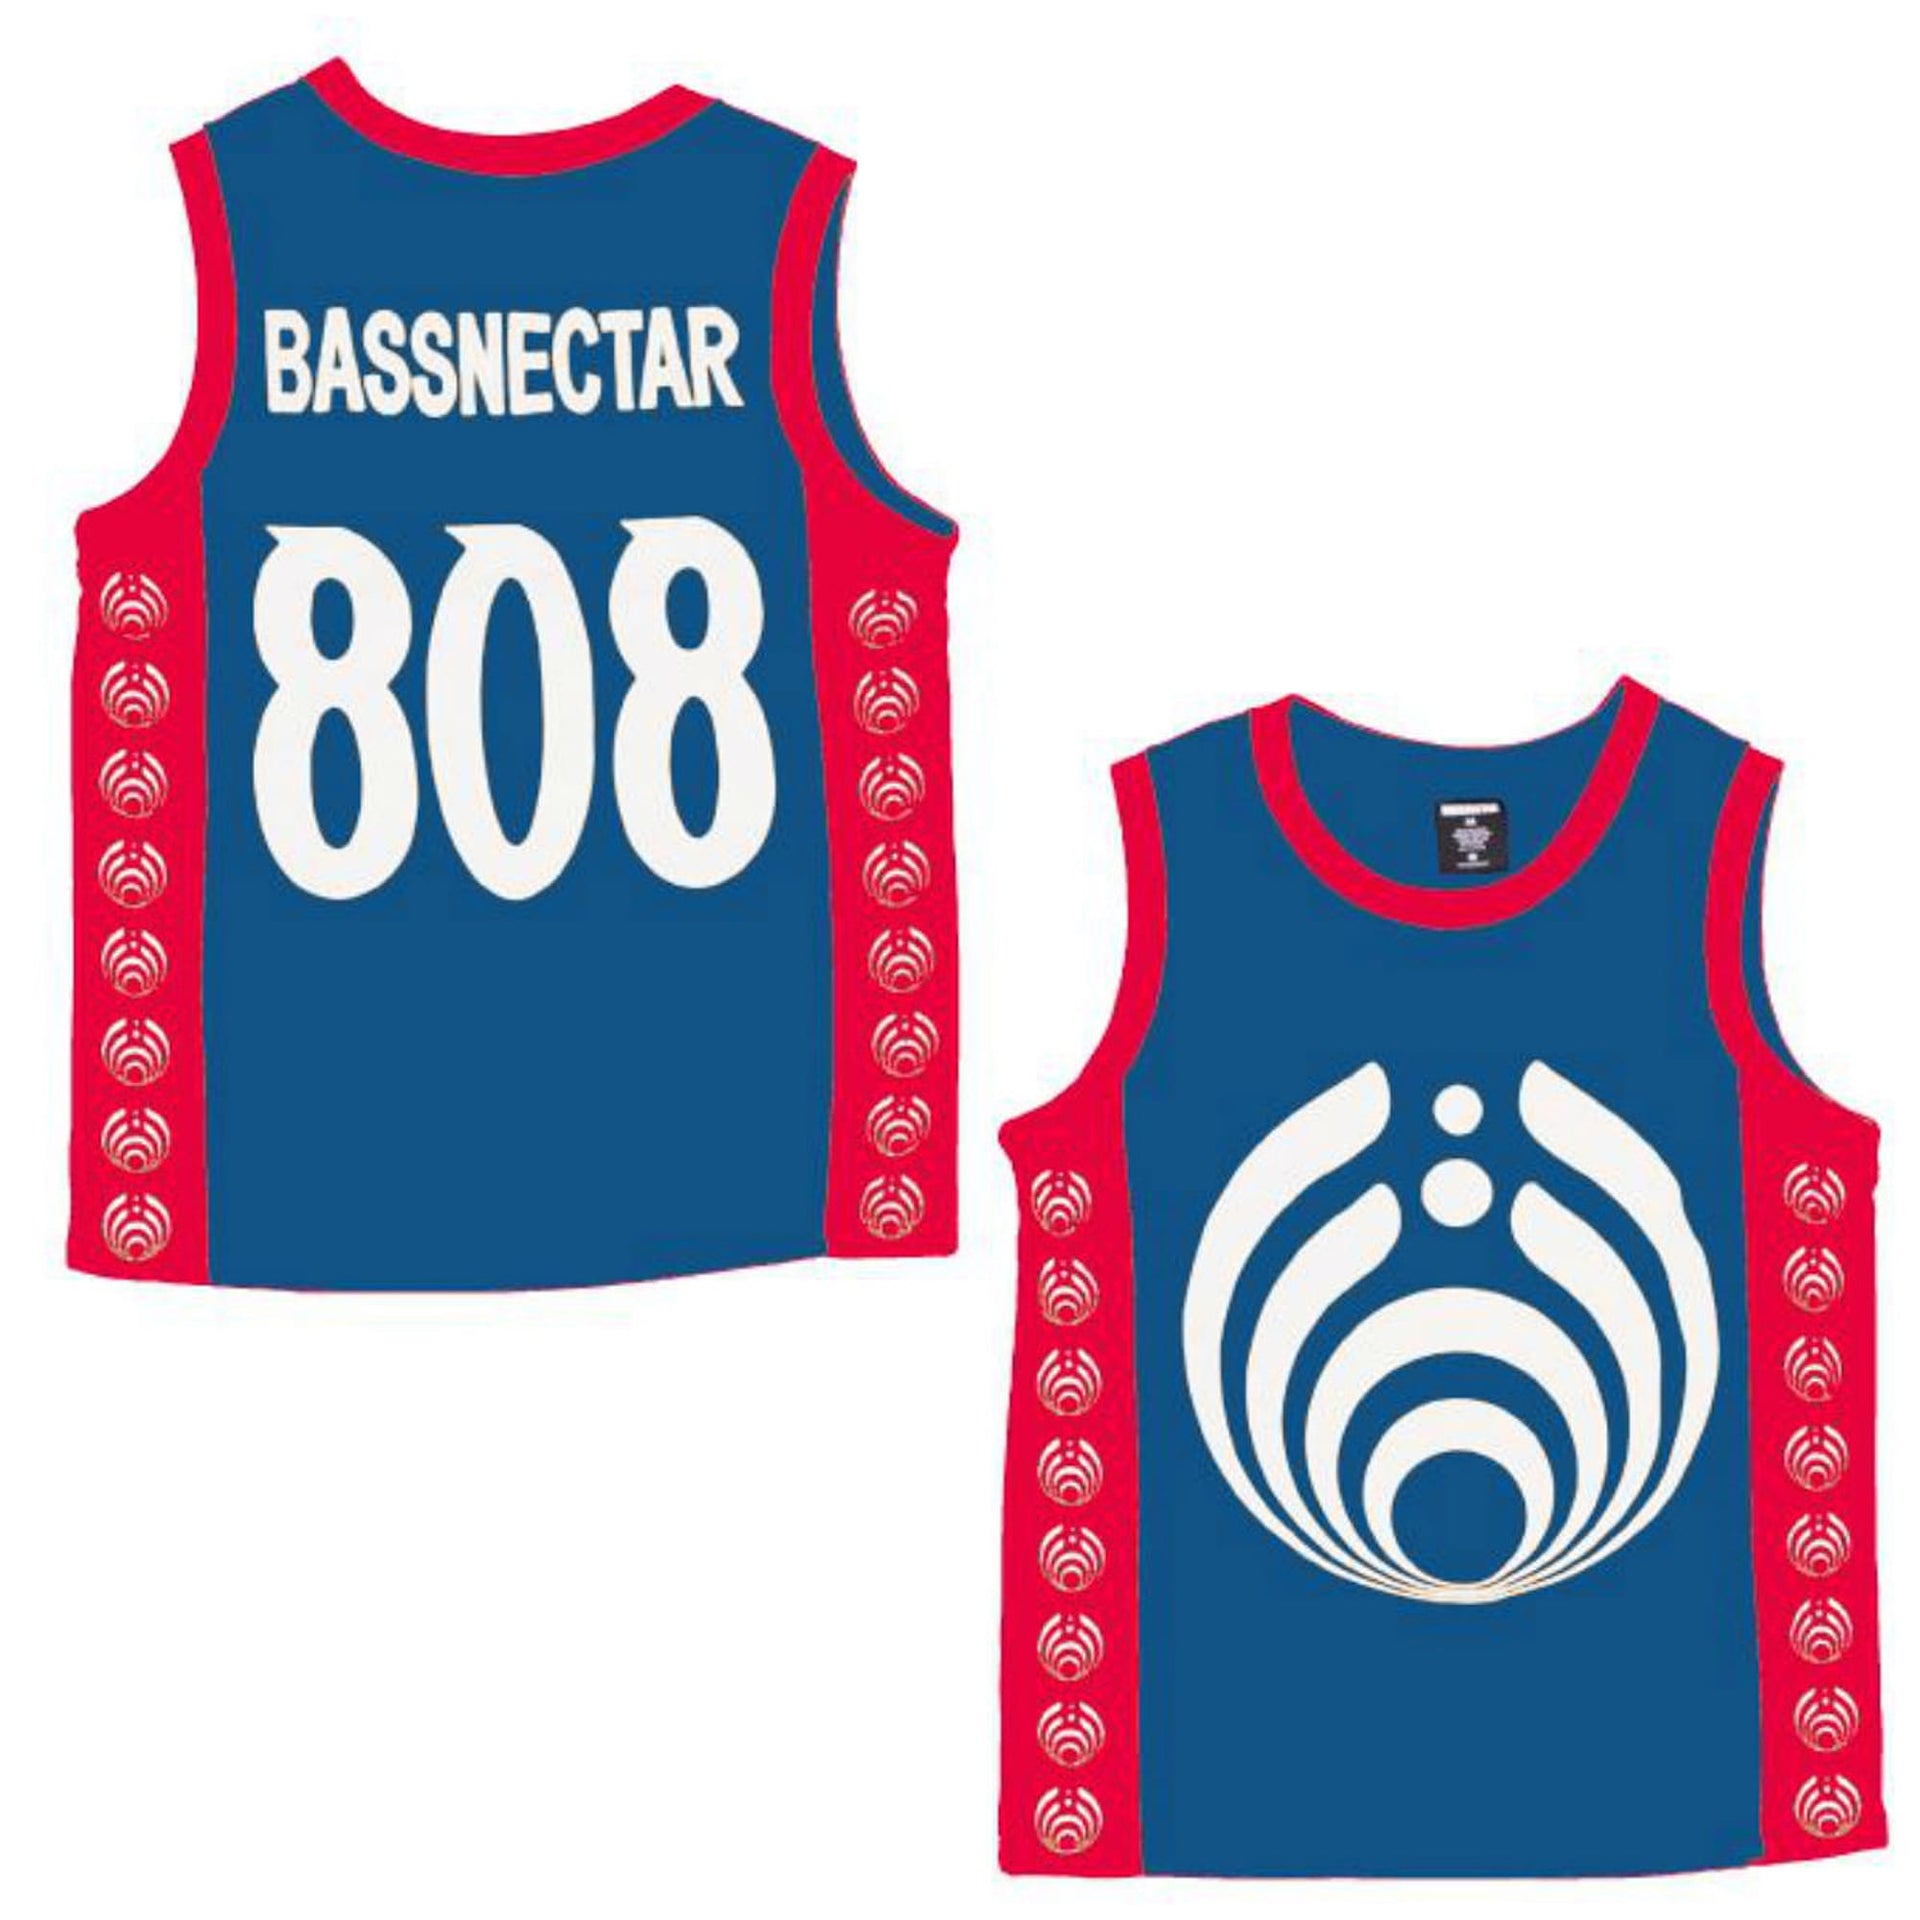 Bassdrop 808 Basketball Jersey - Red/White/Blue